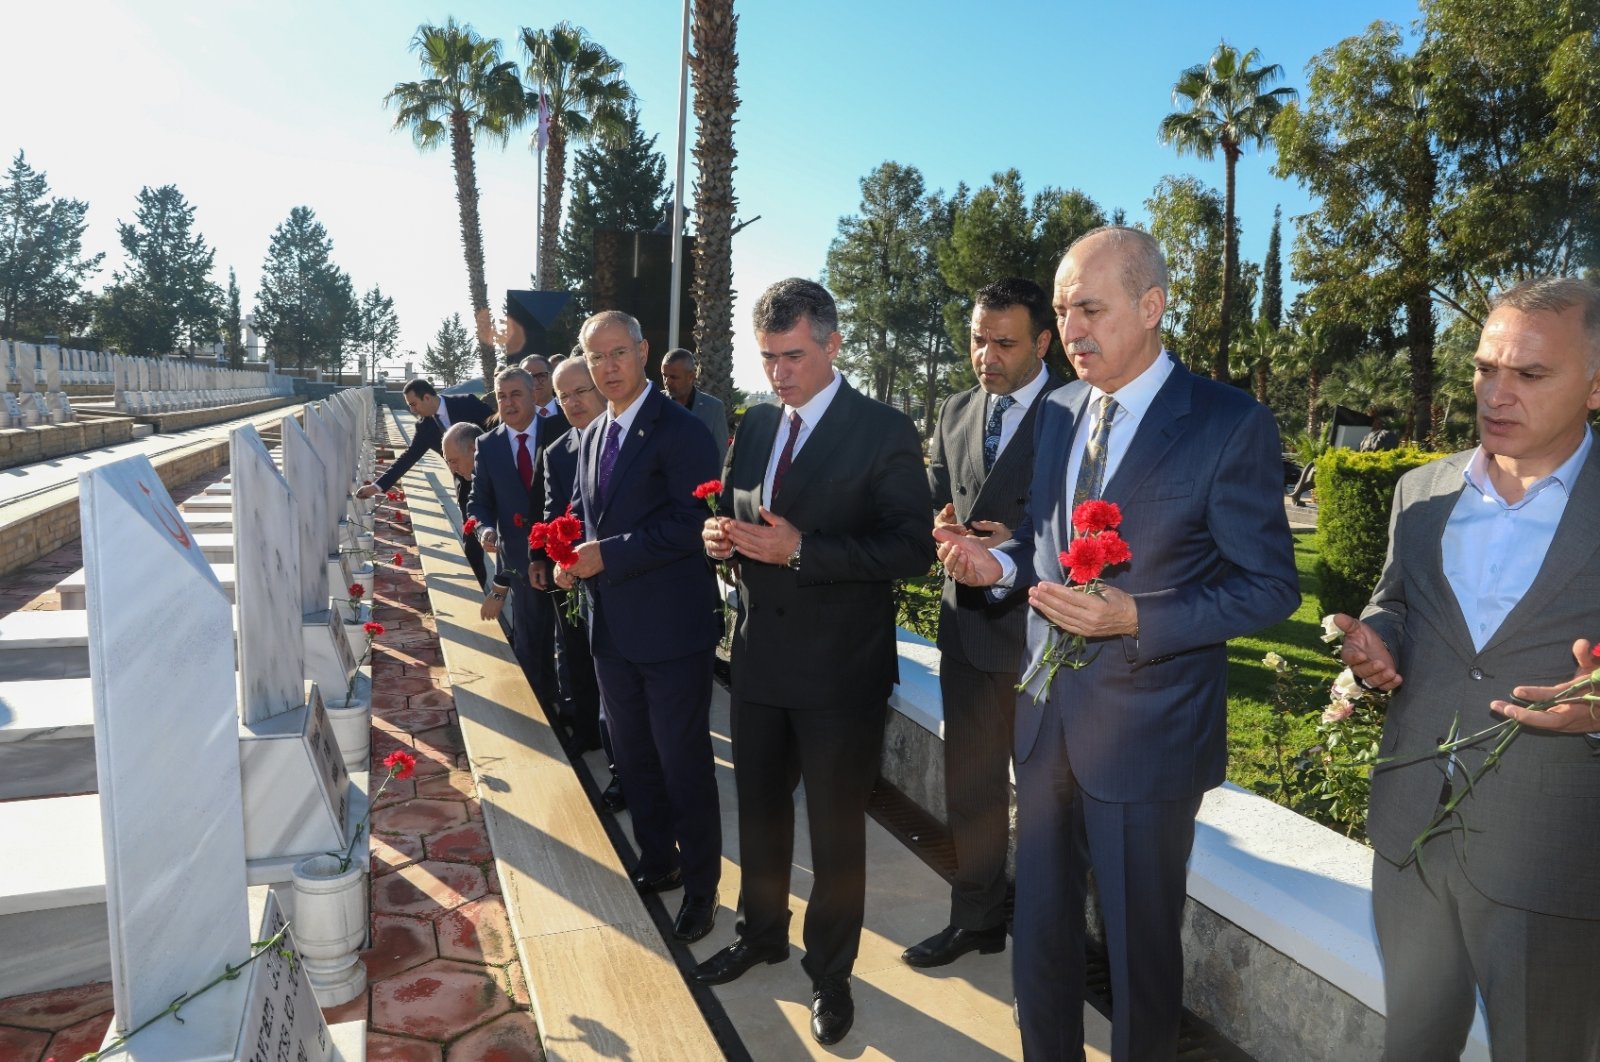 AK Party delegation visits a martyrdom in Lefkoşa (Nicosia), Turkish Cyprus, Dec. 19, 2022. (AA Photo)